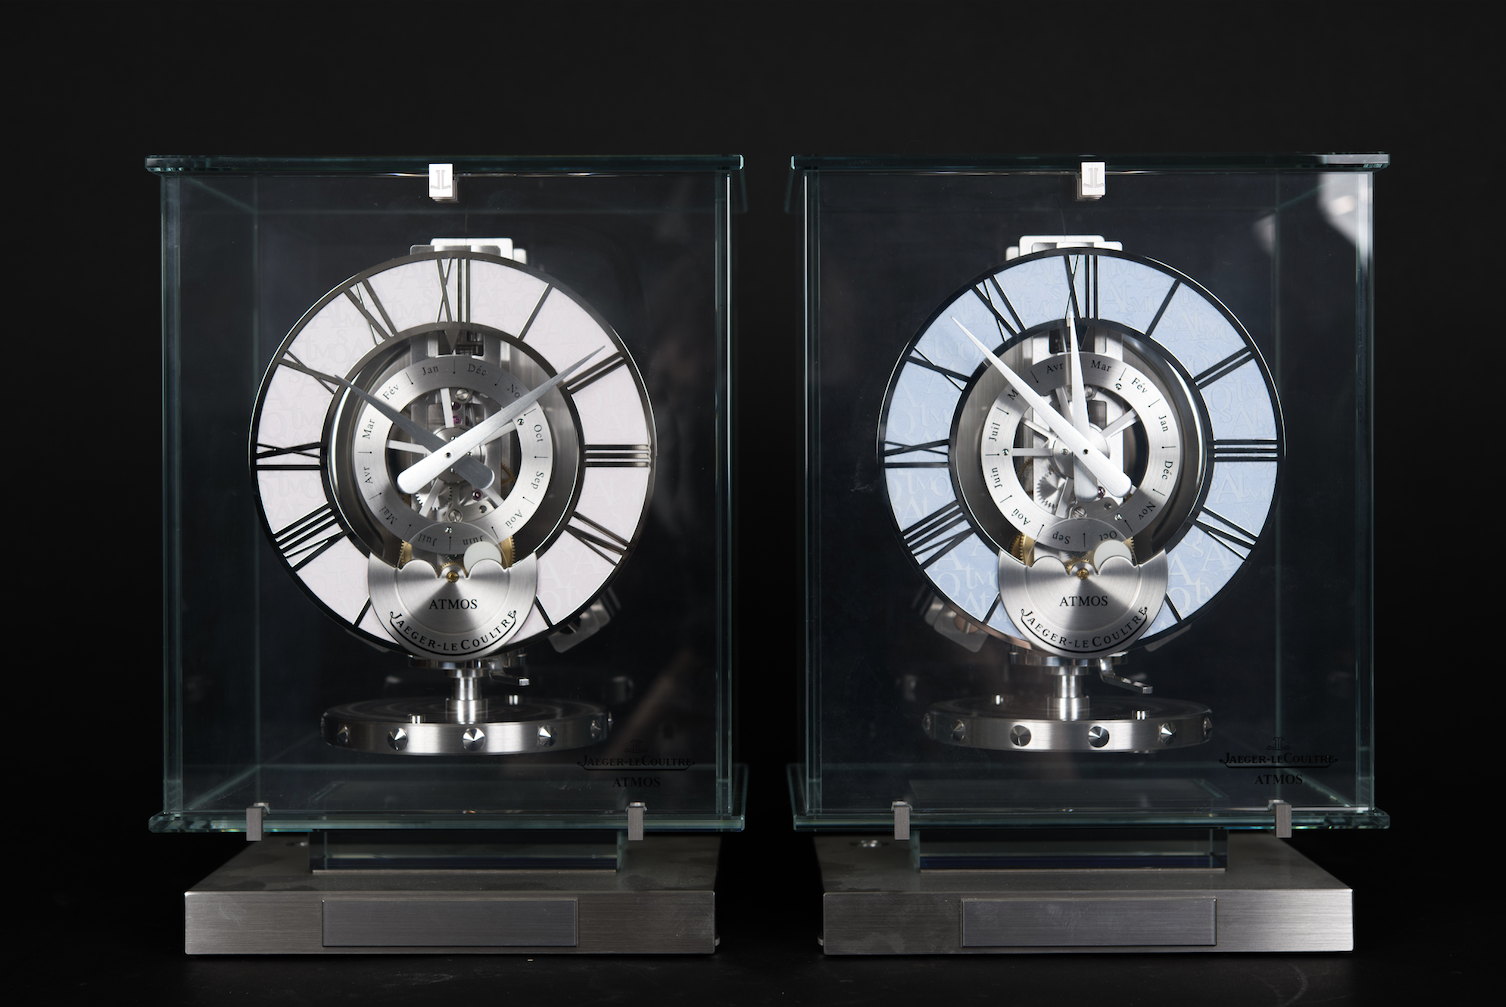 Atmos "Birth Date" von Jaeger LeCoultre, Model: Transparente